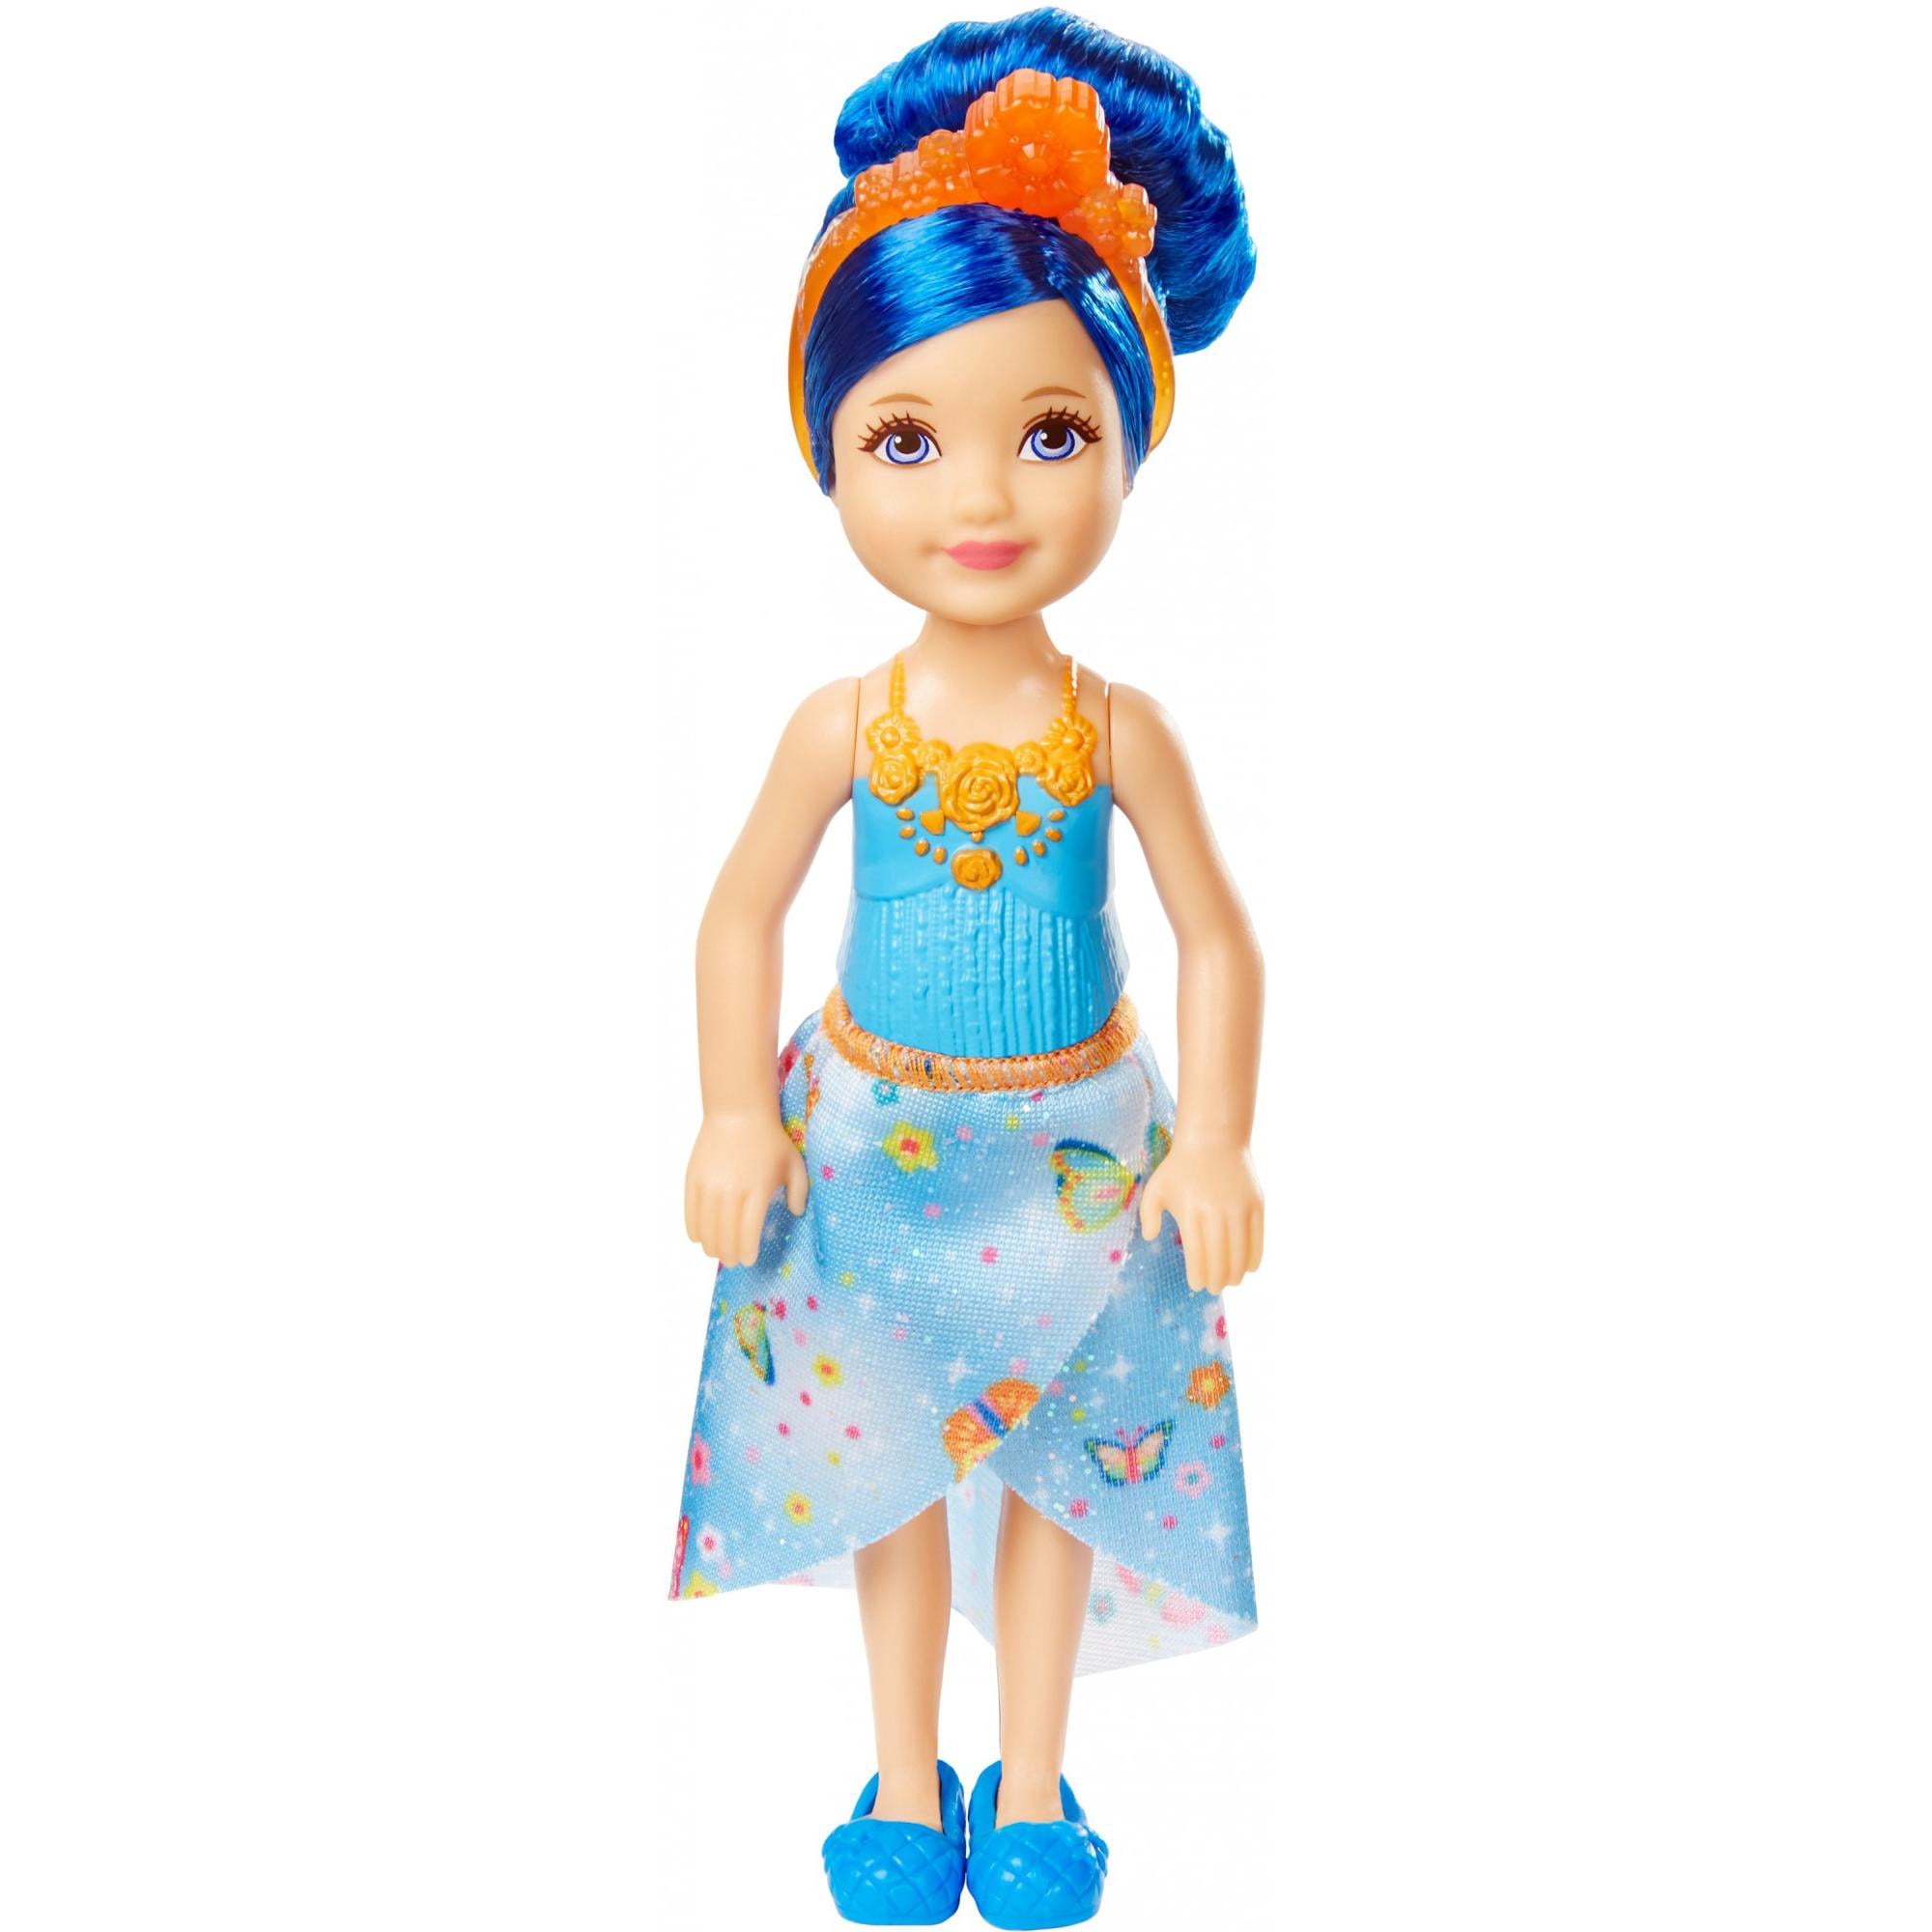 Mutton Expert in progress Barbie Dreamtopia Rainbow Cove Blue Sprite Doll - Walmart.com